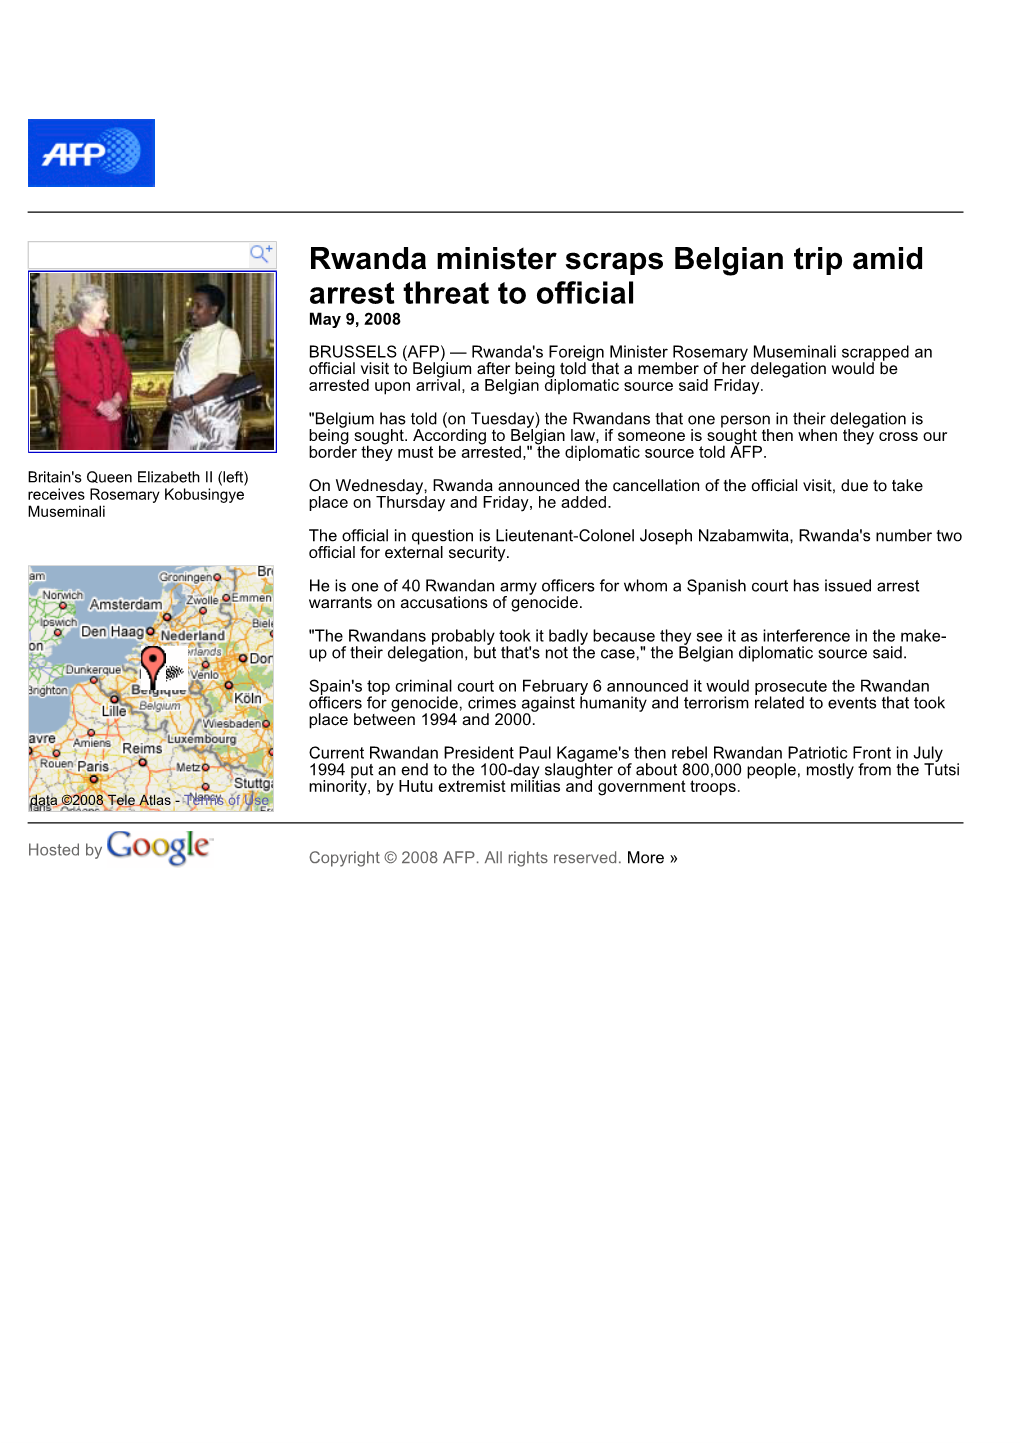 Rwanda Minister Scraps Belgian Trip Amid Arrest Threat to Official